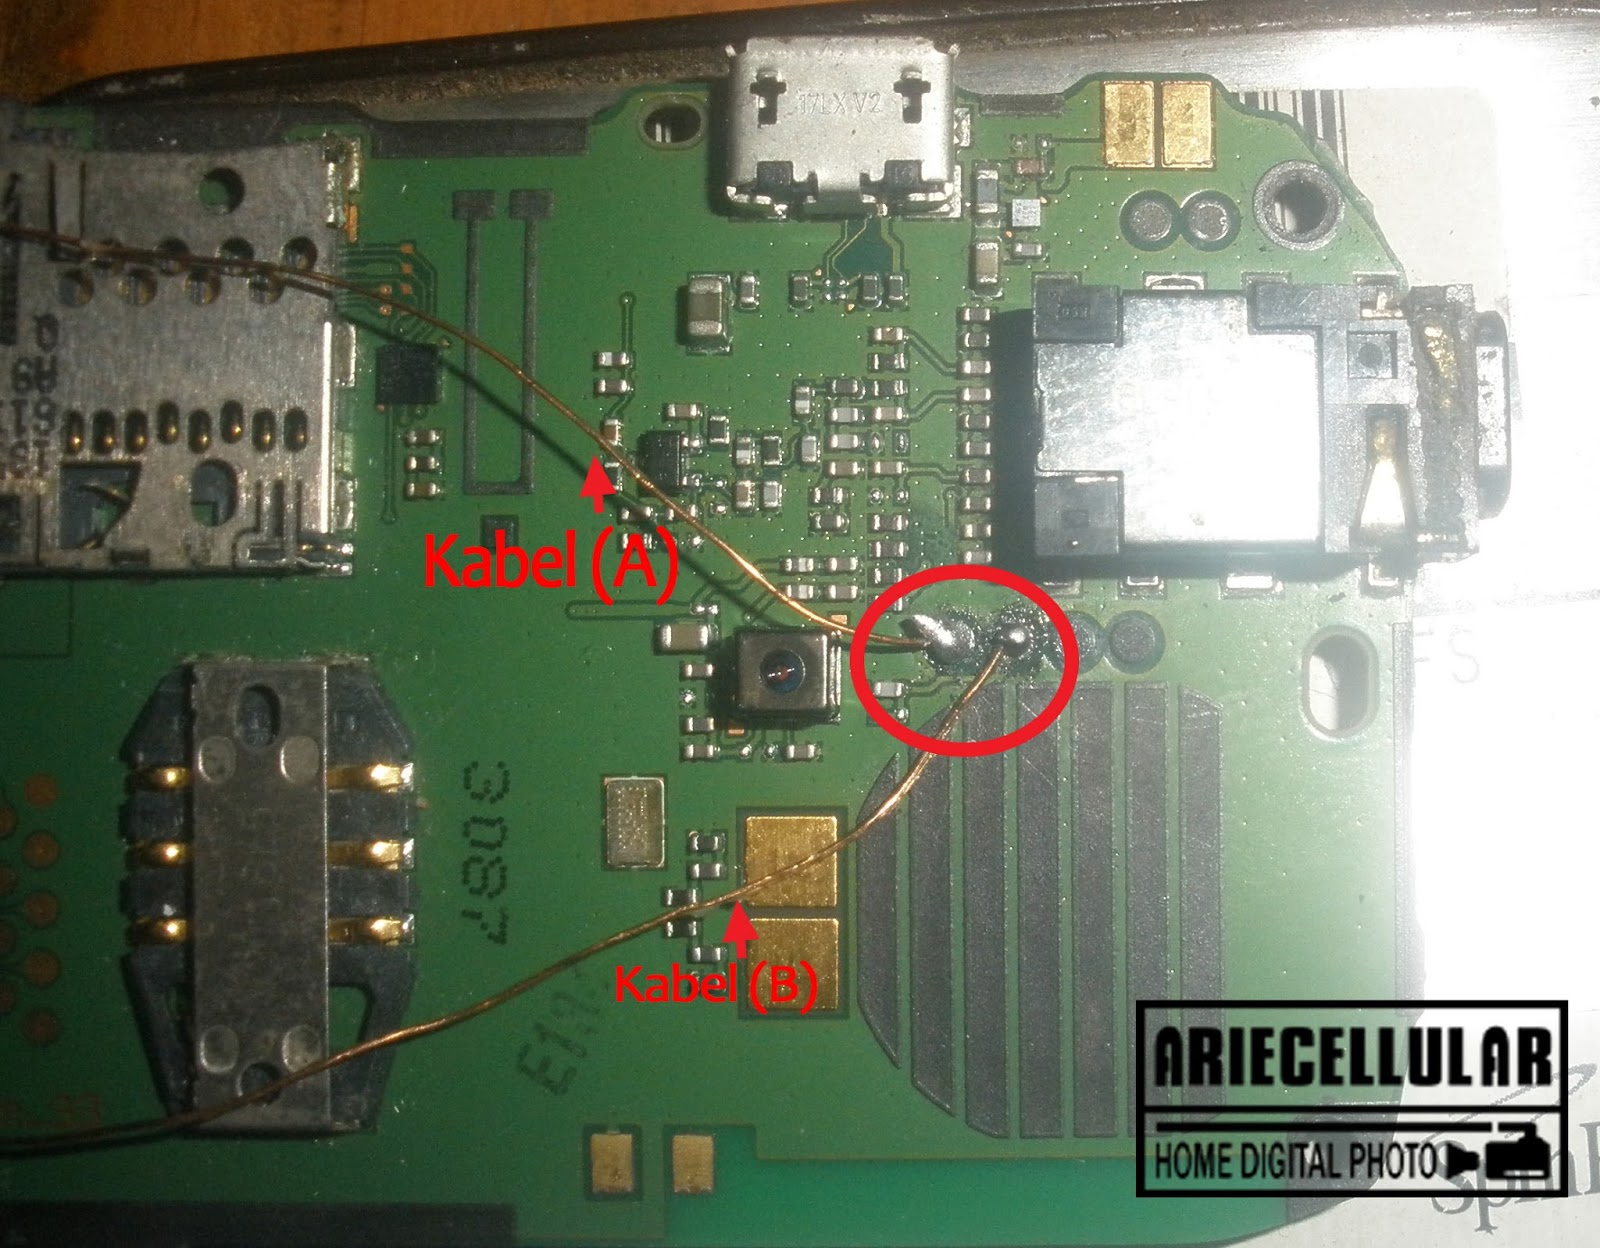 ARIE CELLULAR: Cara memperbaiki hp nokia C1 Lampu LCD mati